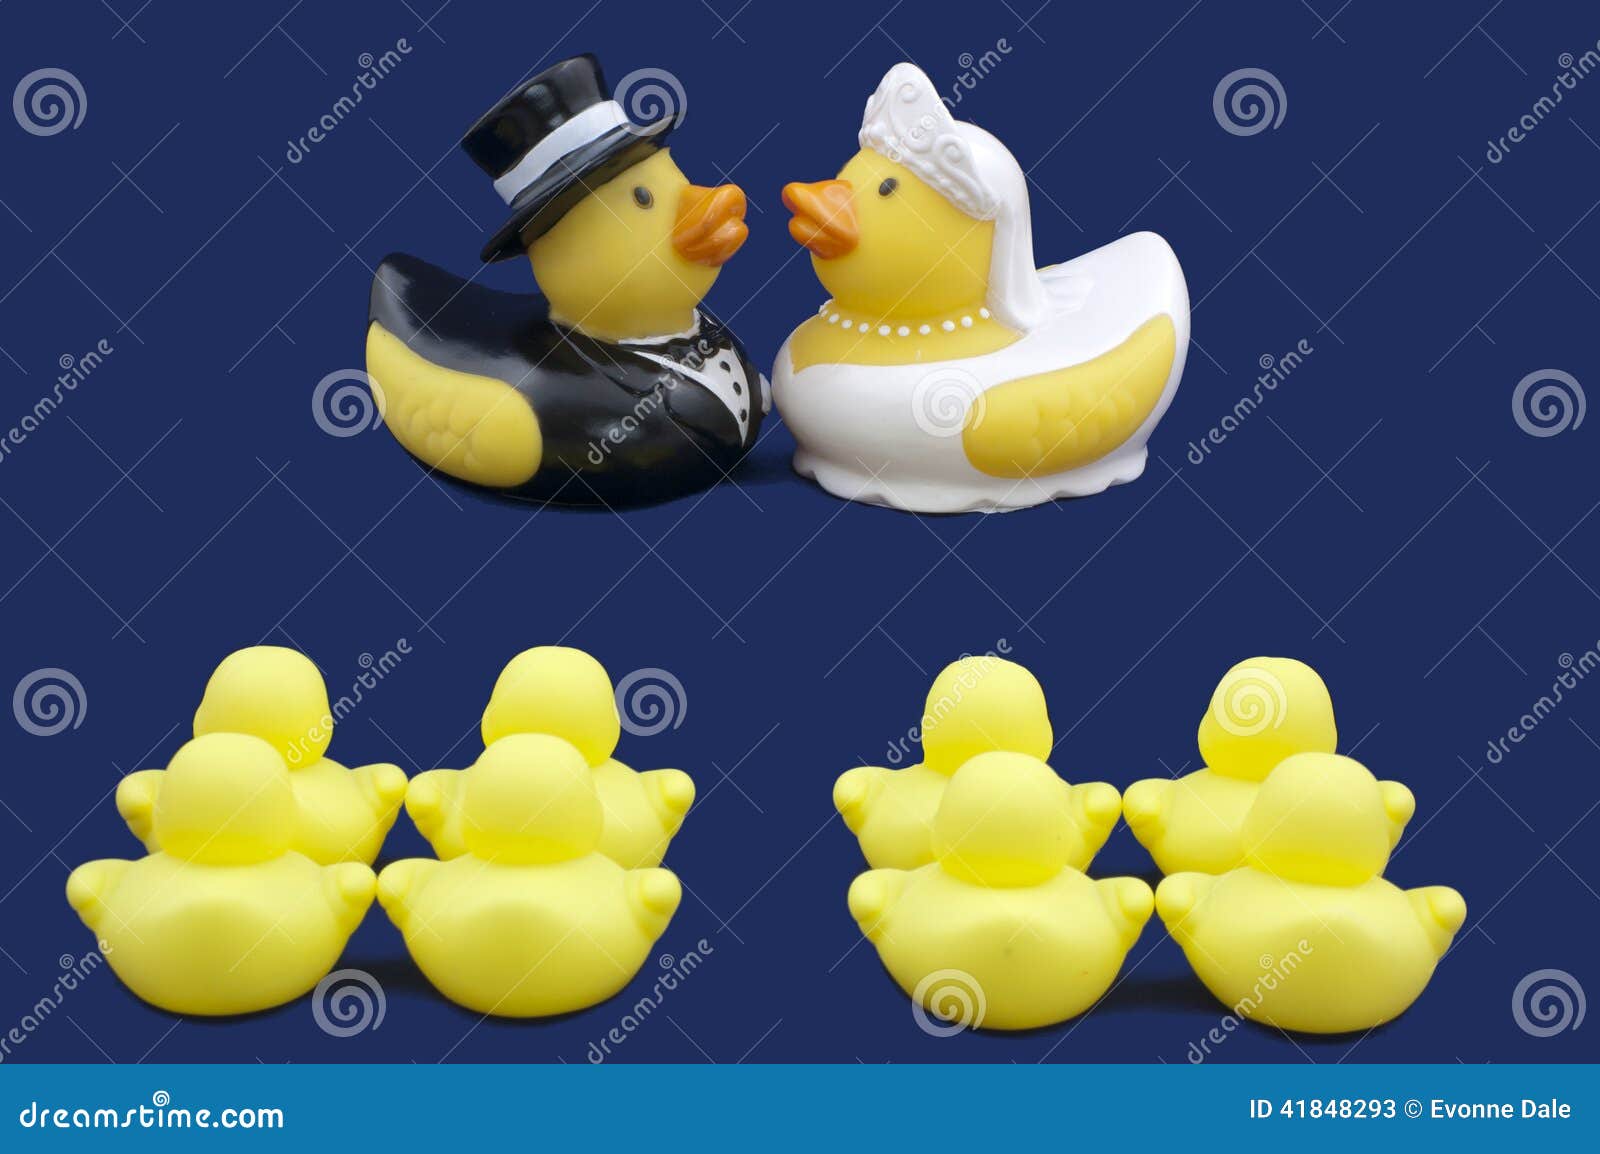 Rubber Ducks Bride And Groom Wedding Ceremony Stock Image Image